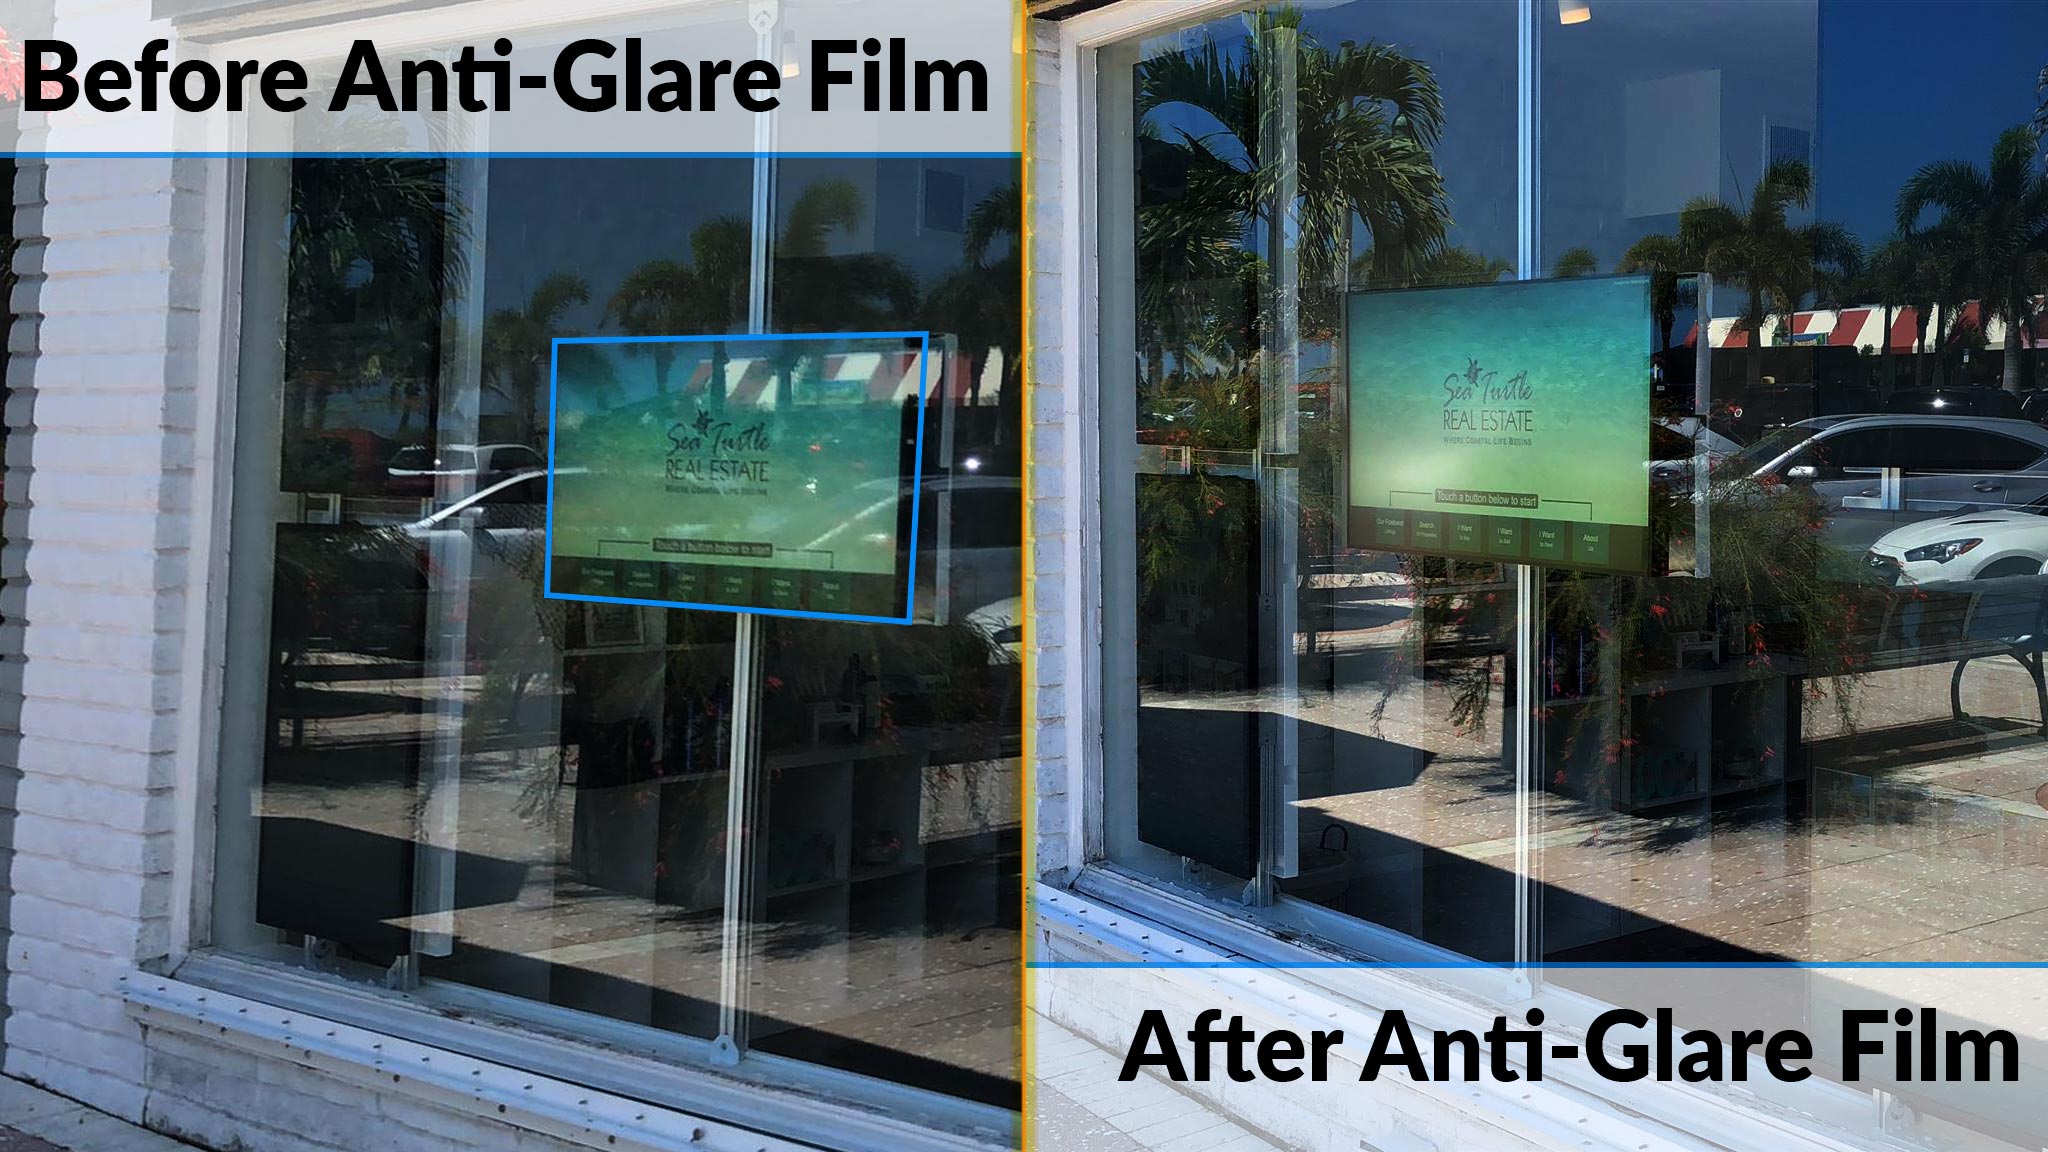 Anti-glare films